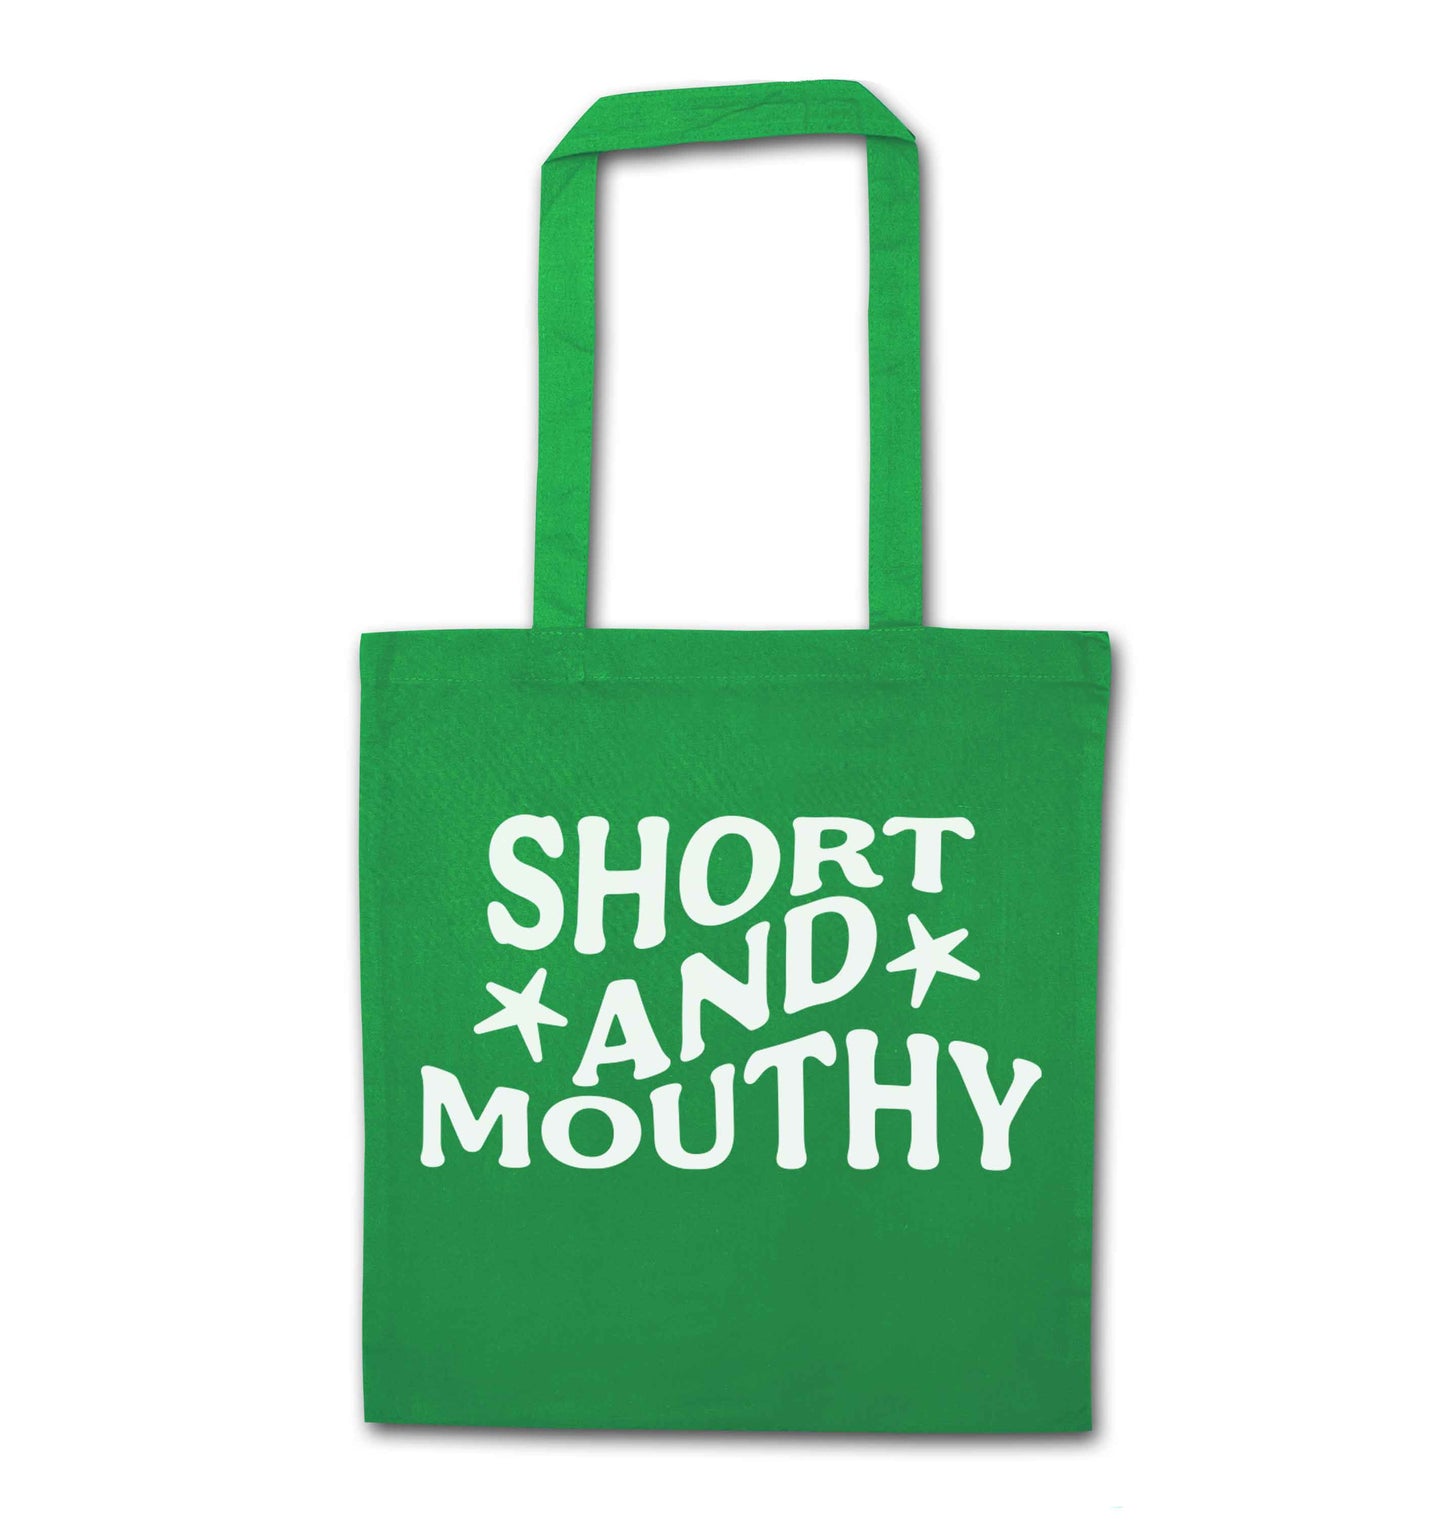 Short and mouthy green tote bag